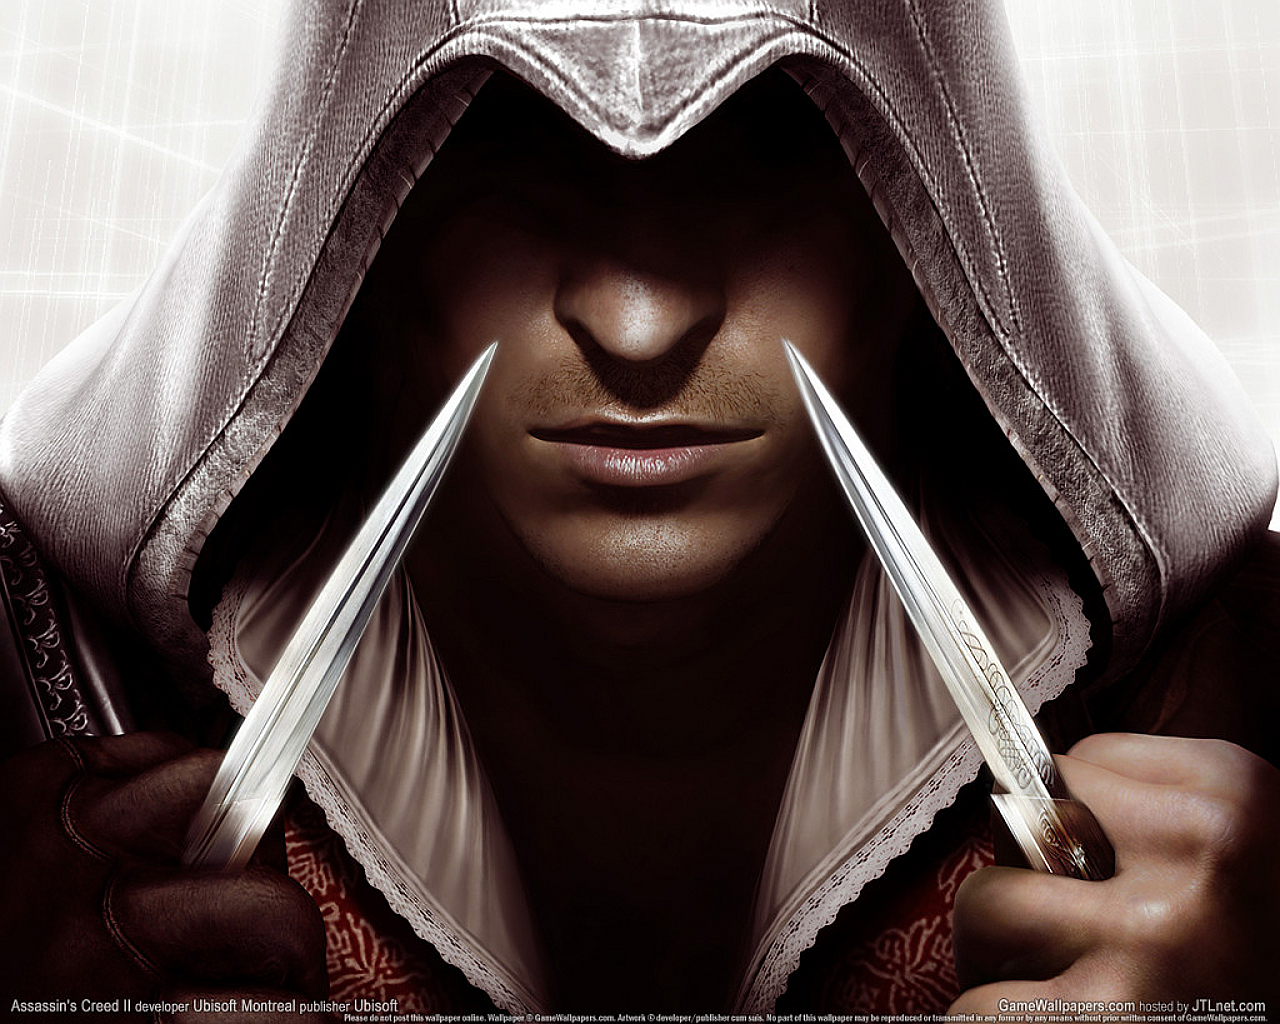 Ezio Assassins Wallpaper Creed